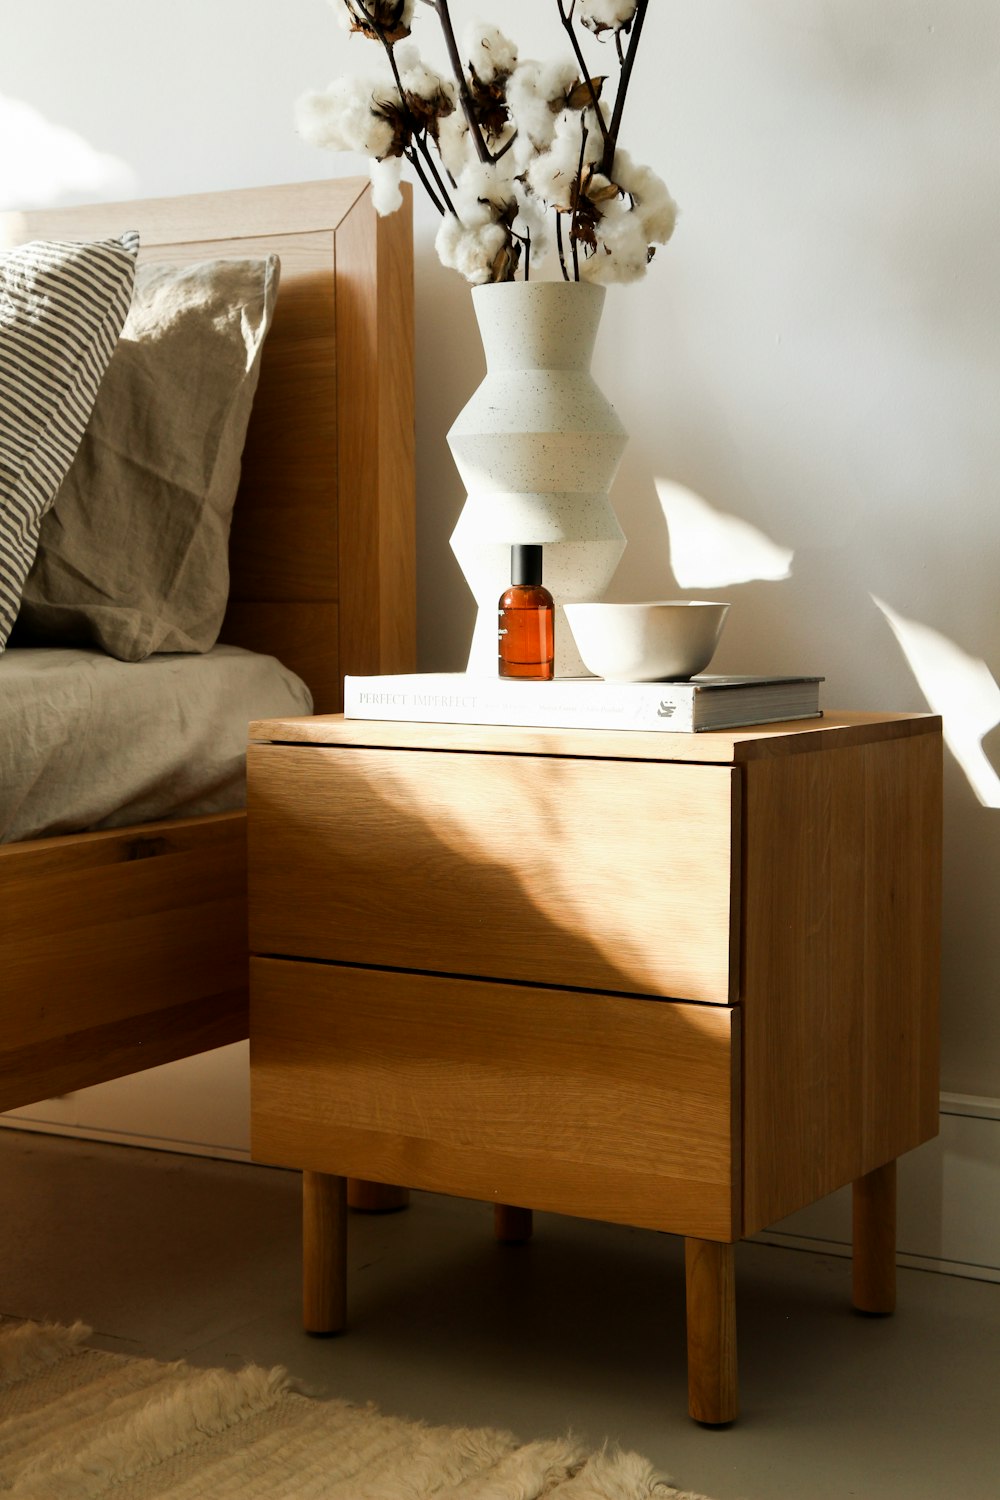 white ceramic vase on brown wooden nightstand